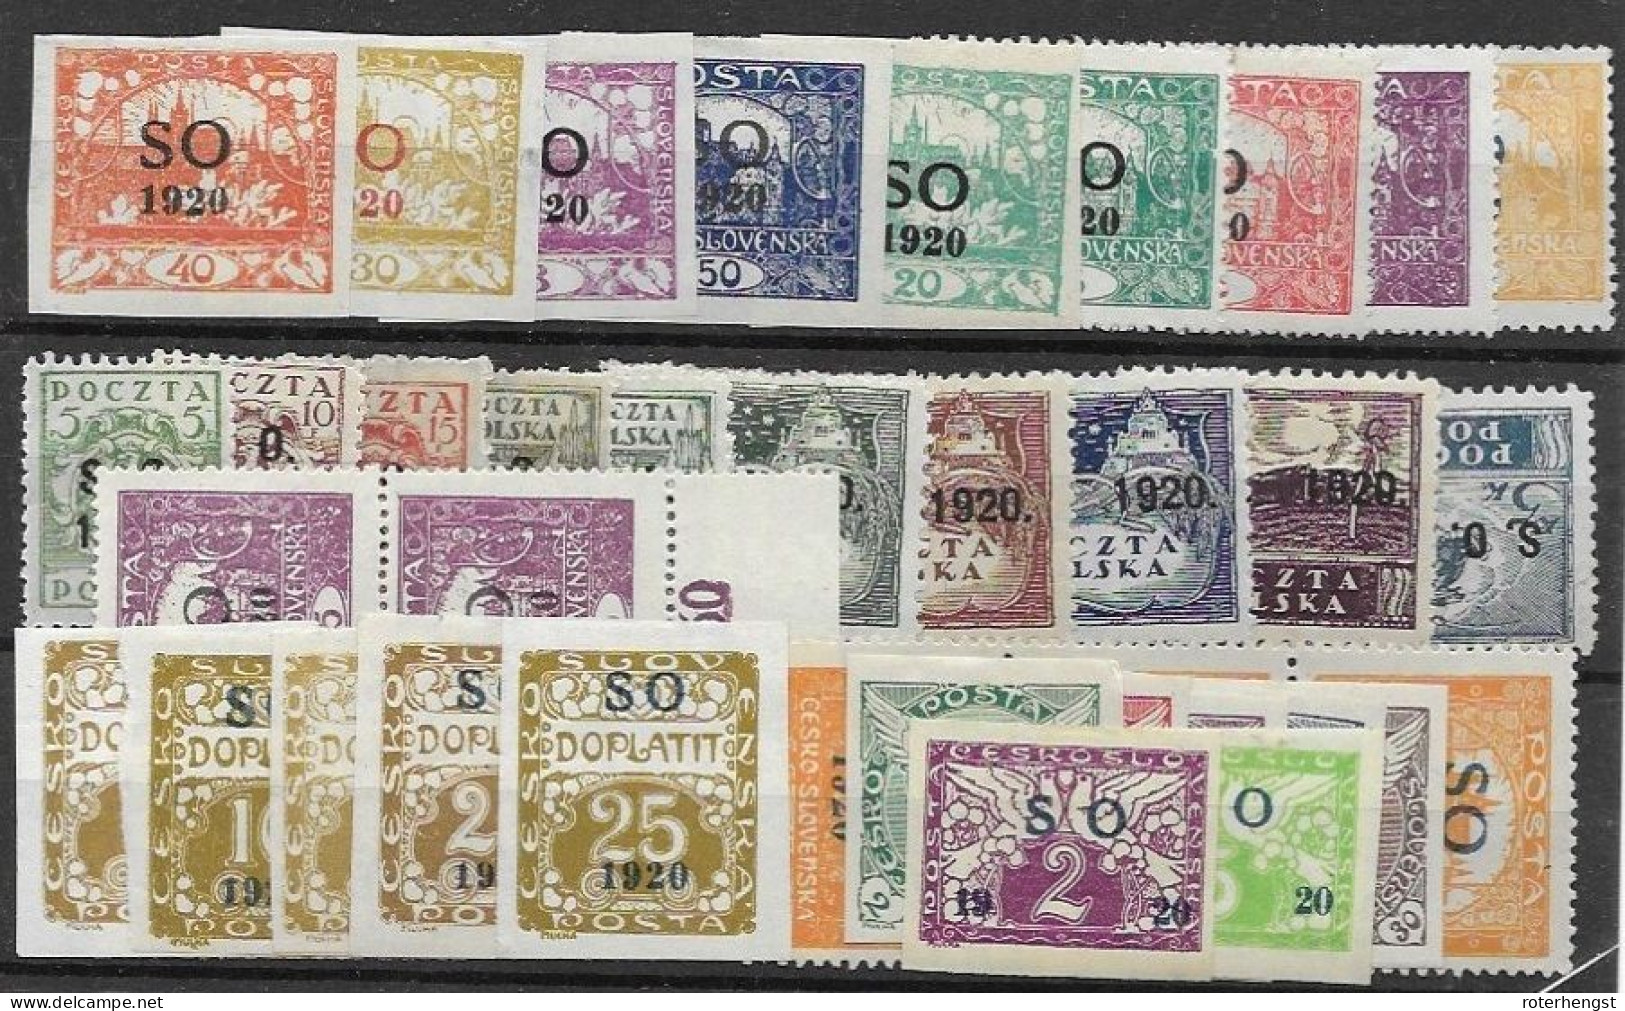 Silesia Schlesien Lot Mh * 10 Euros 1920 36 Stamps (5 Are Mnh **, 1 Has No Gum) - Slesia